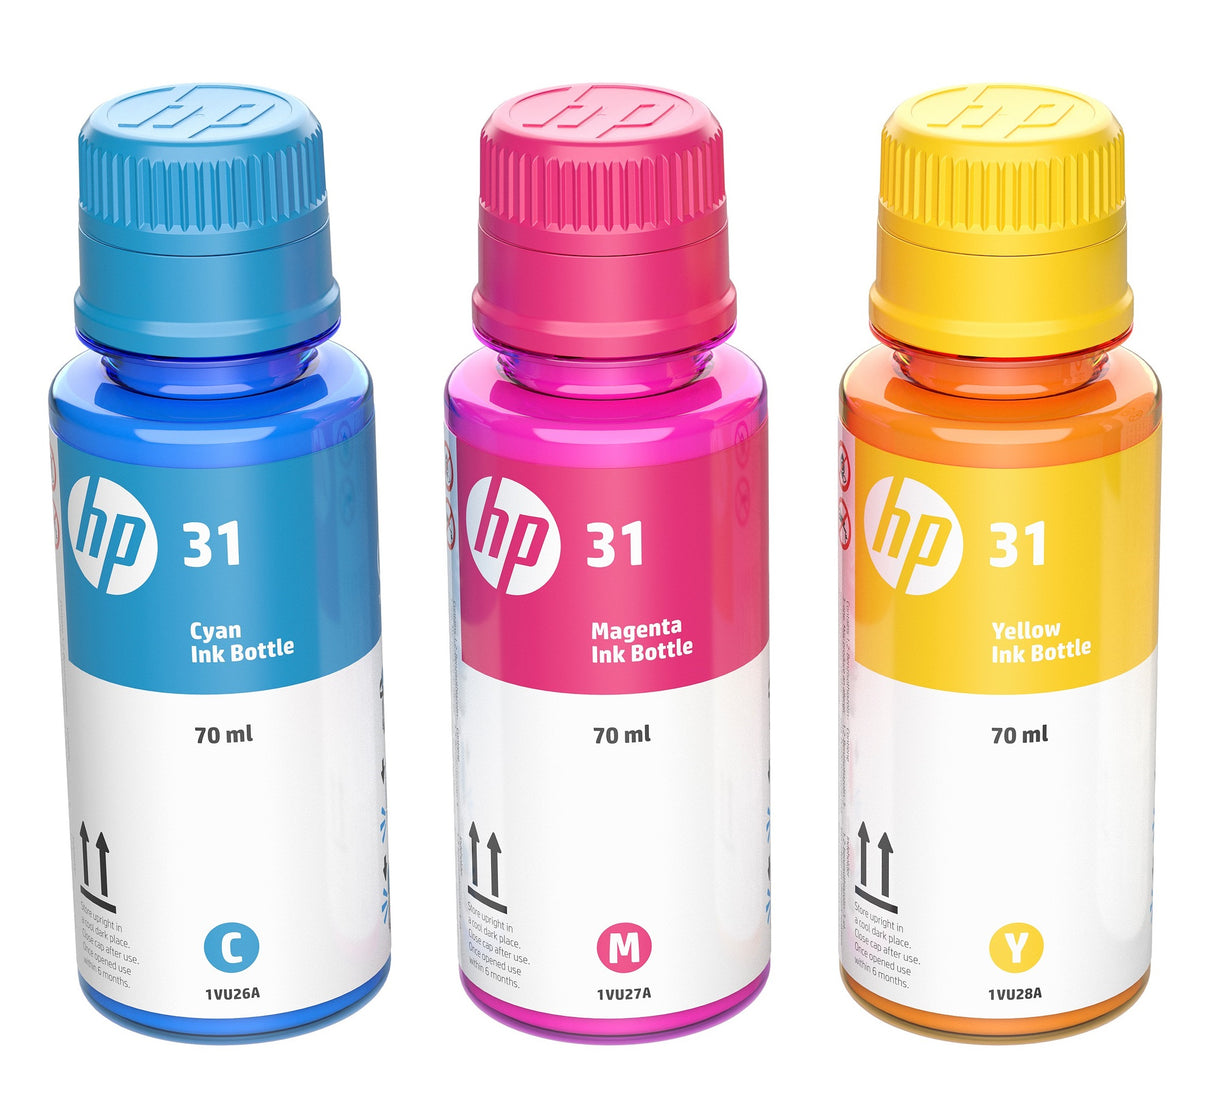 HP 31 Cyan Magenta Yellow Ink Bottle Bundle Pack